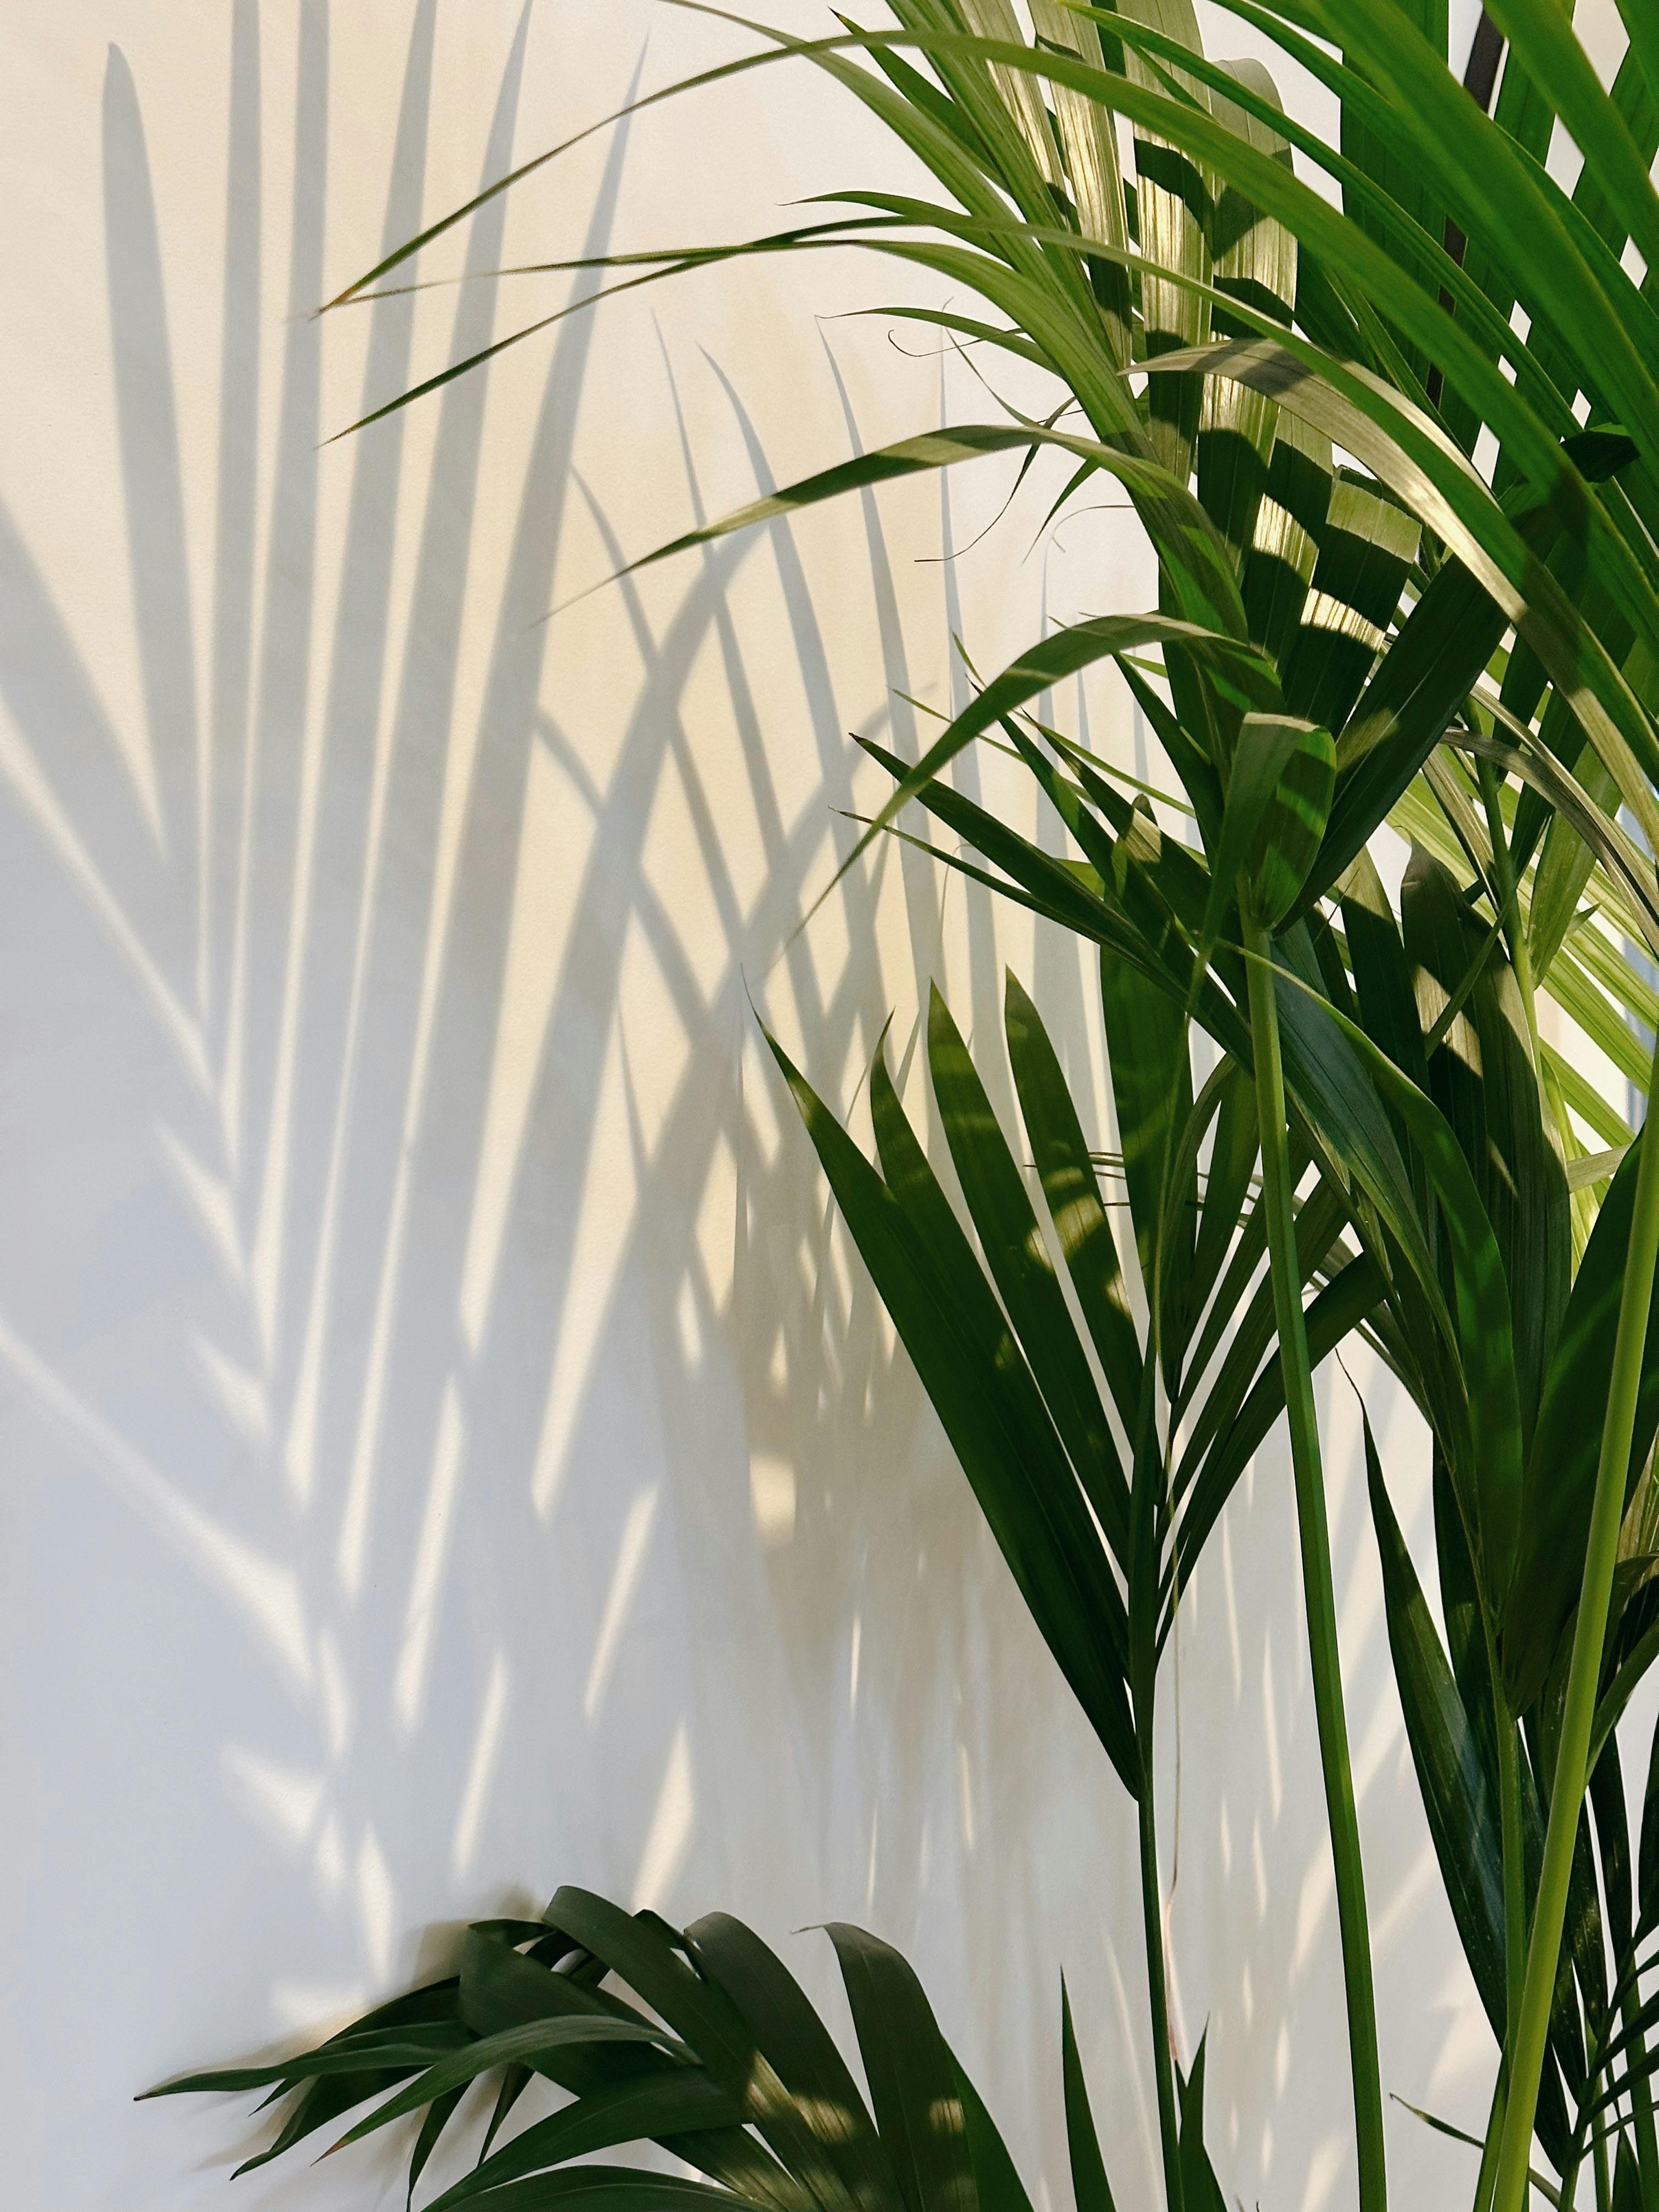 Green Plant on White Wall · Free Stock Photo